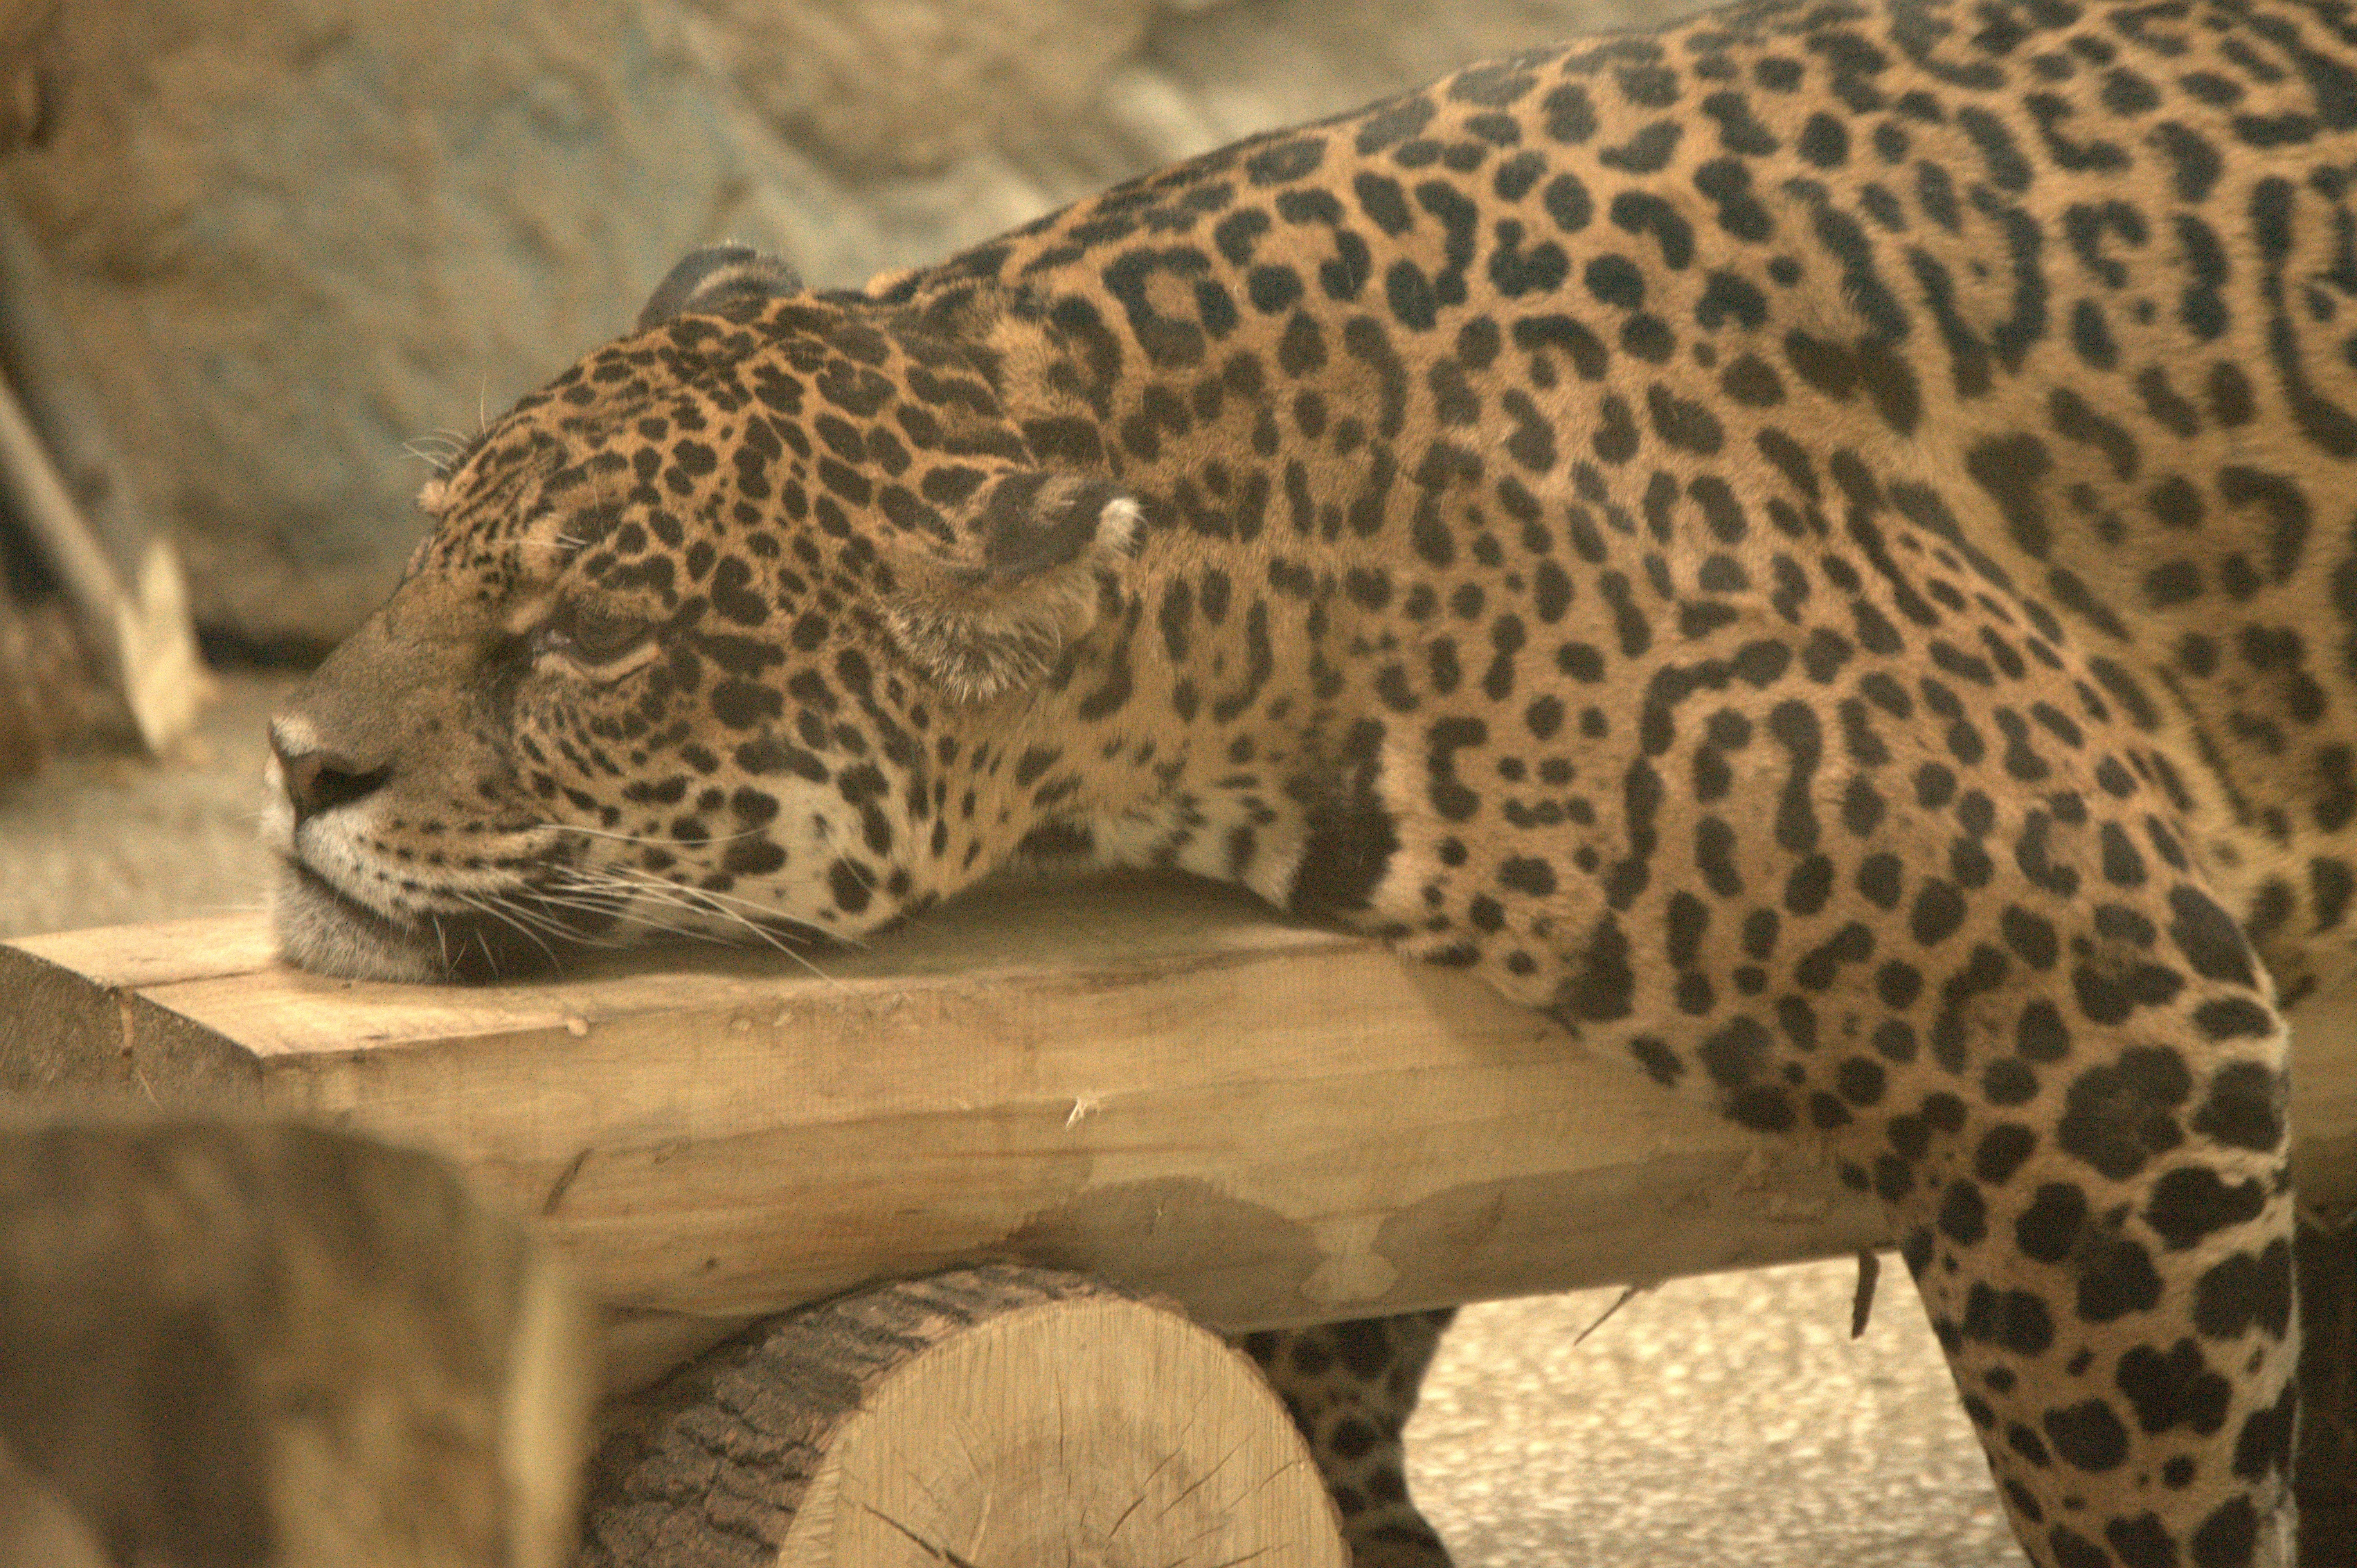 Free Images : jaguar, panthera onca, wild cat, leopard, wildlife ...